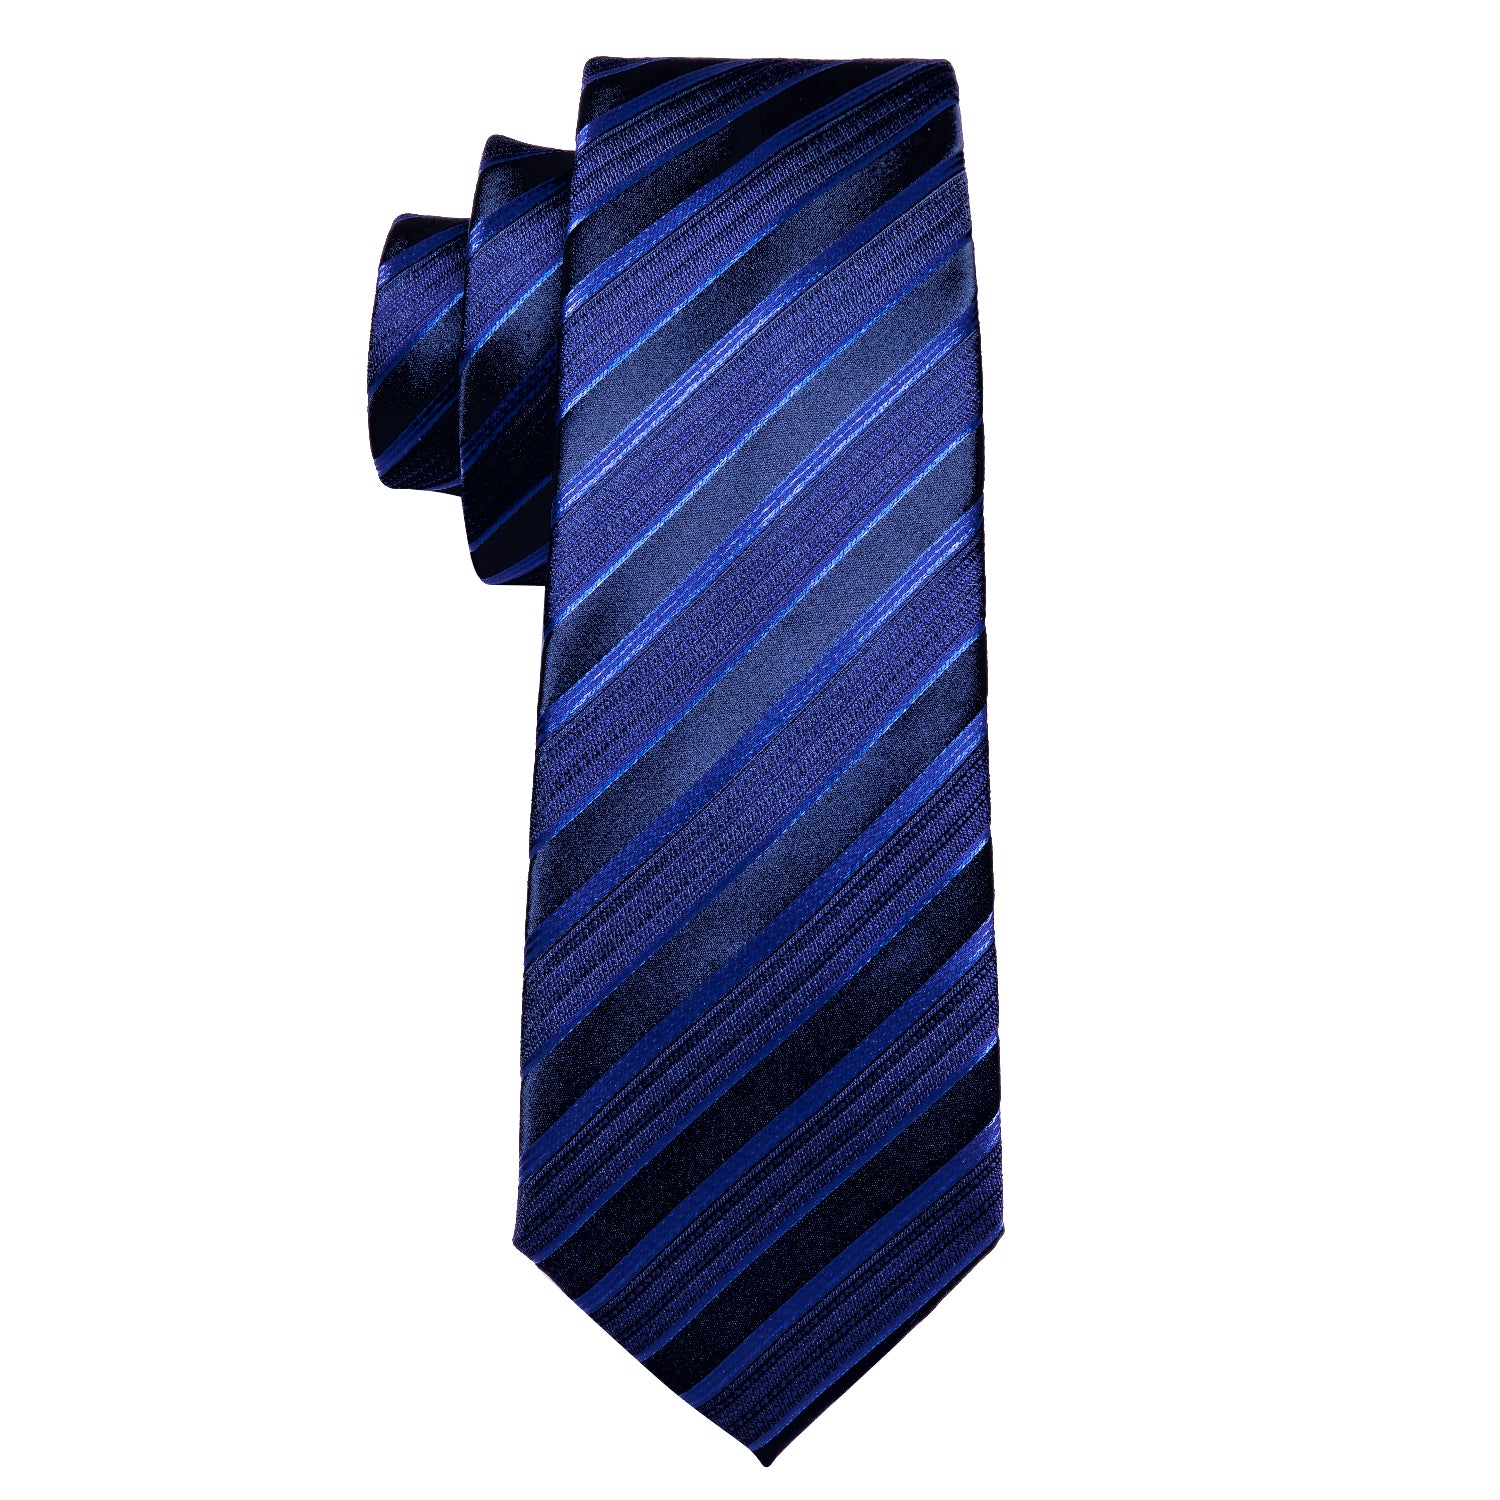 Deep Blue Stripe Tie Pocket Square Cufflinks Set